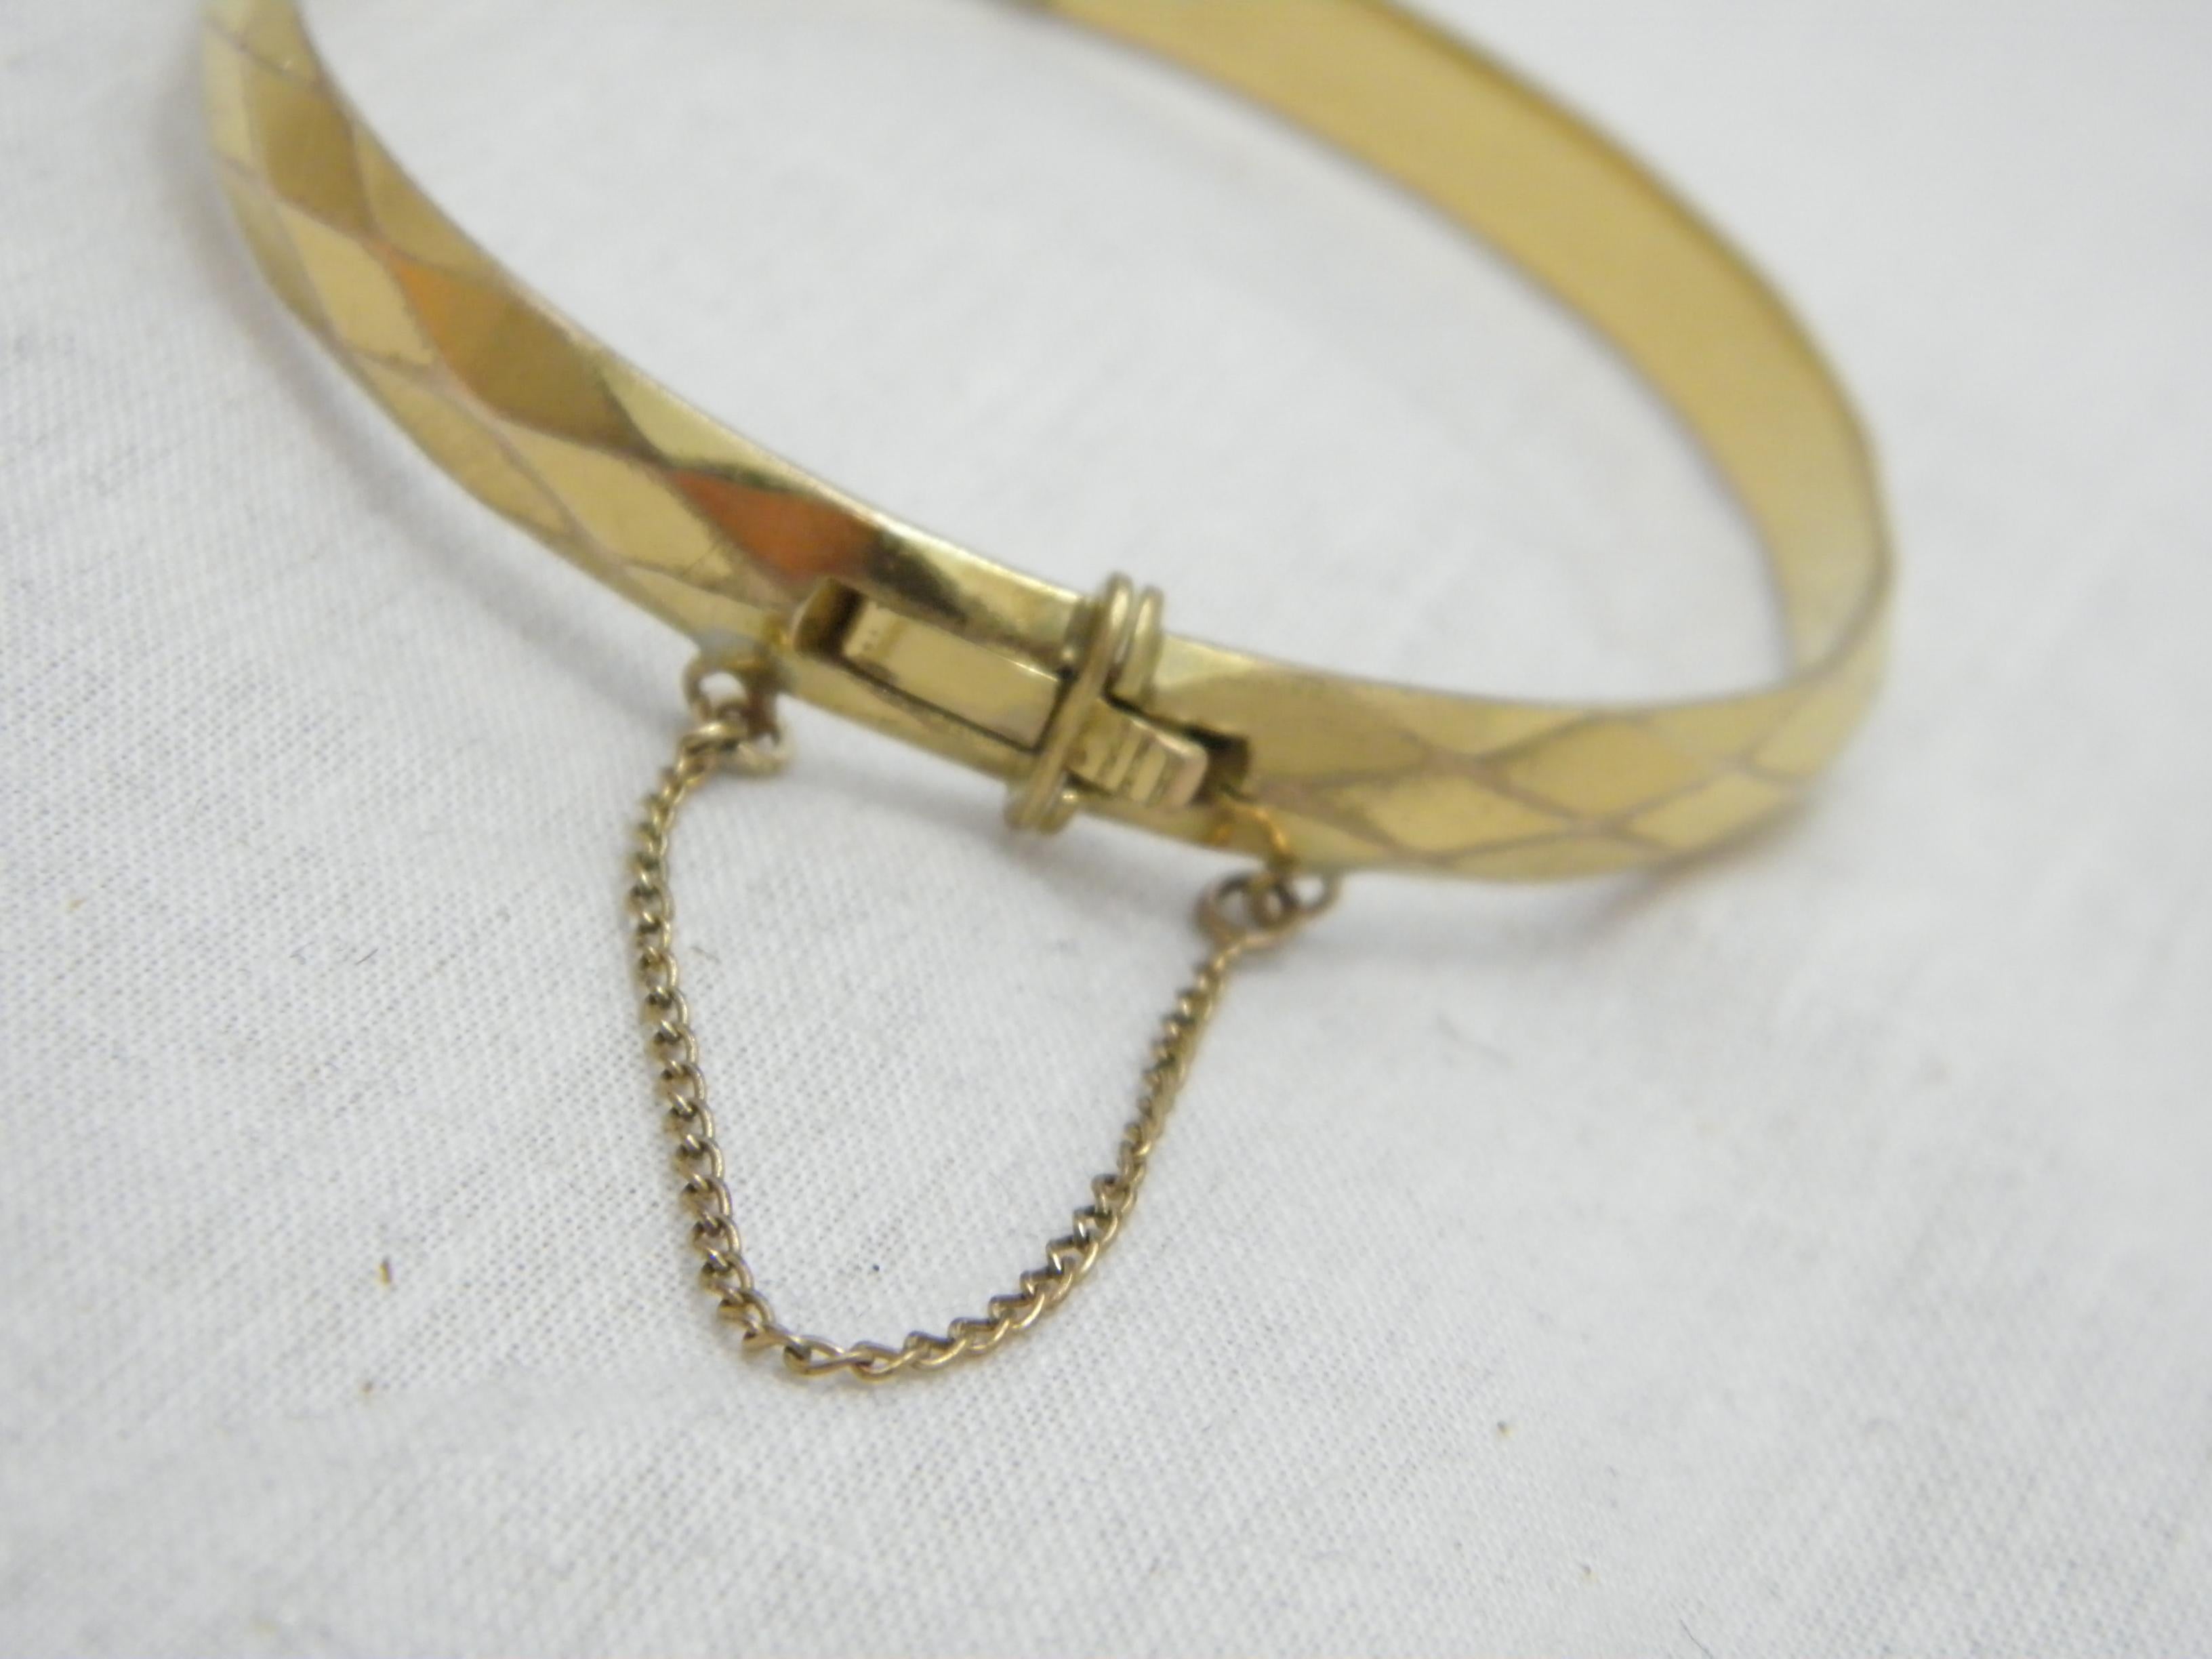 Vintage 9ct Gold 'Metal Cored' Diamond Cut Cuff Hinged Bracelet Bangle 375 For Sale 1